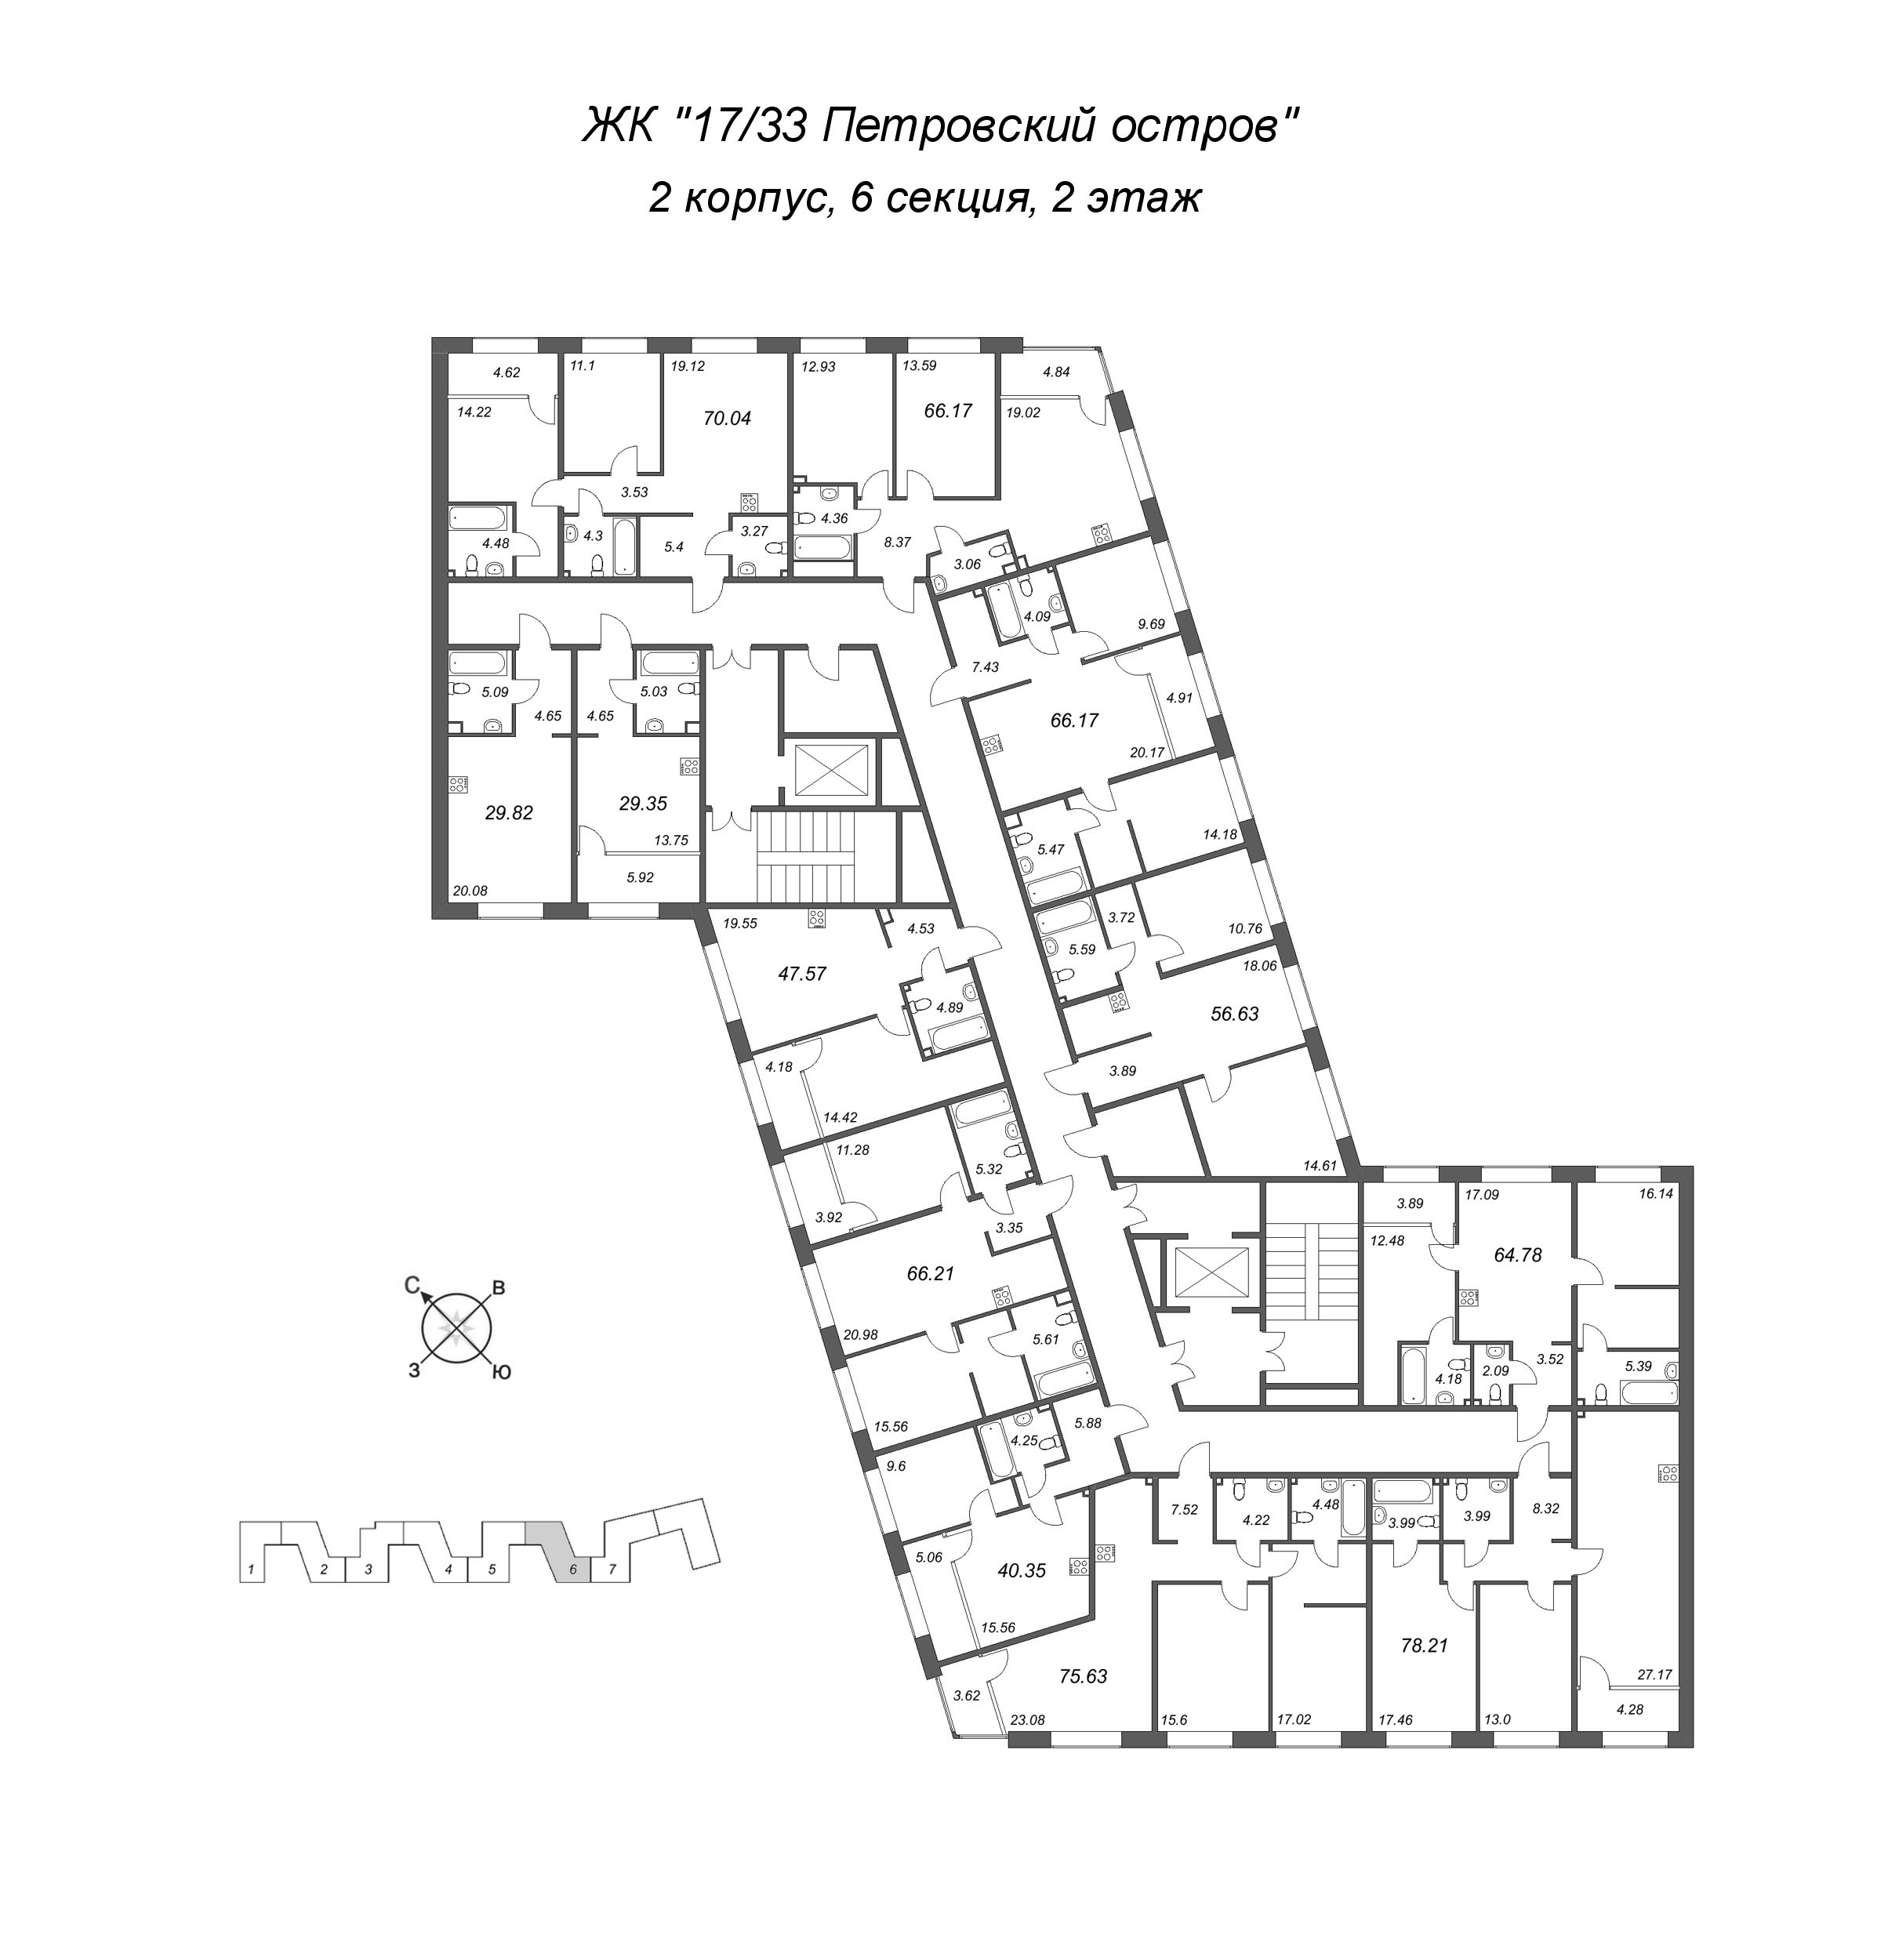 2-комнатная (Евро) квартира, 47.57 м² - планировка этажа